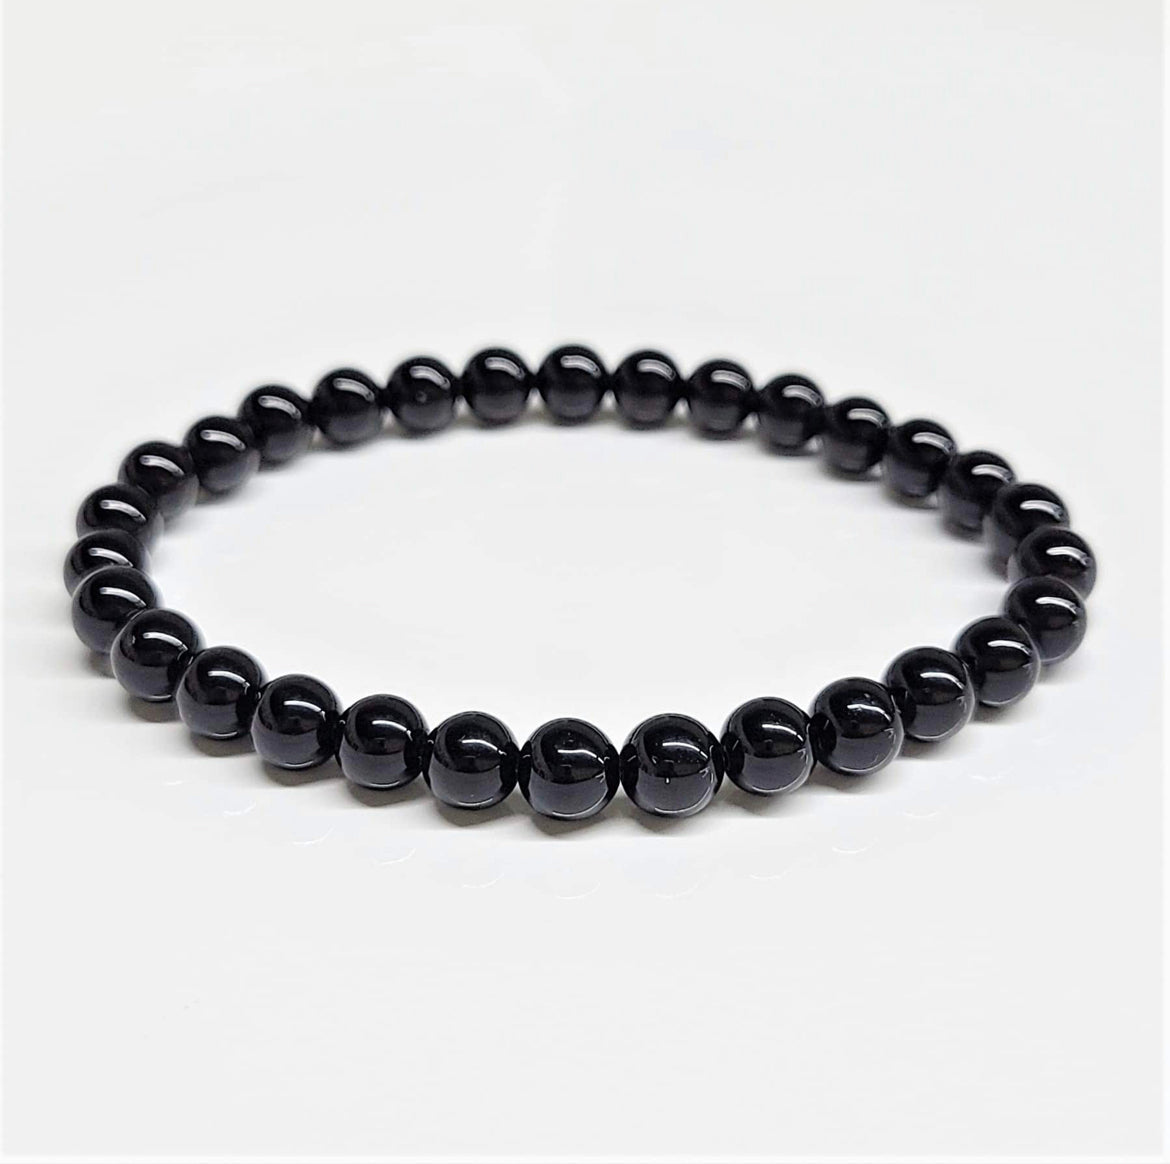 6 mm Obsidian Black Bracelet 1